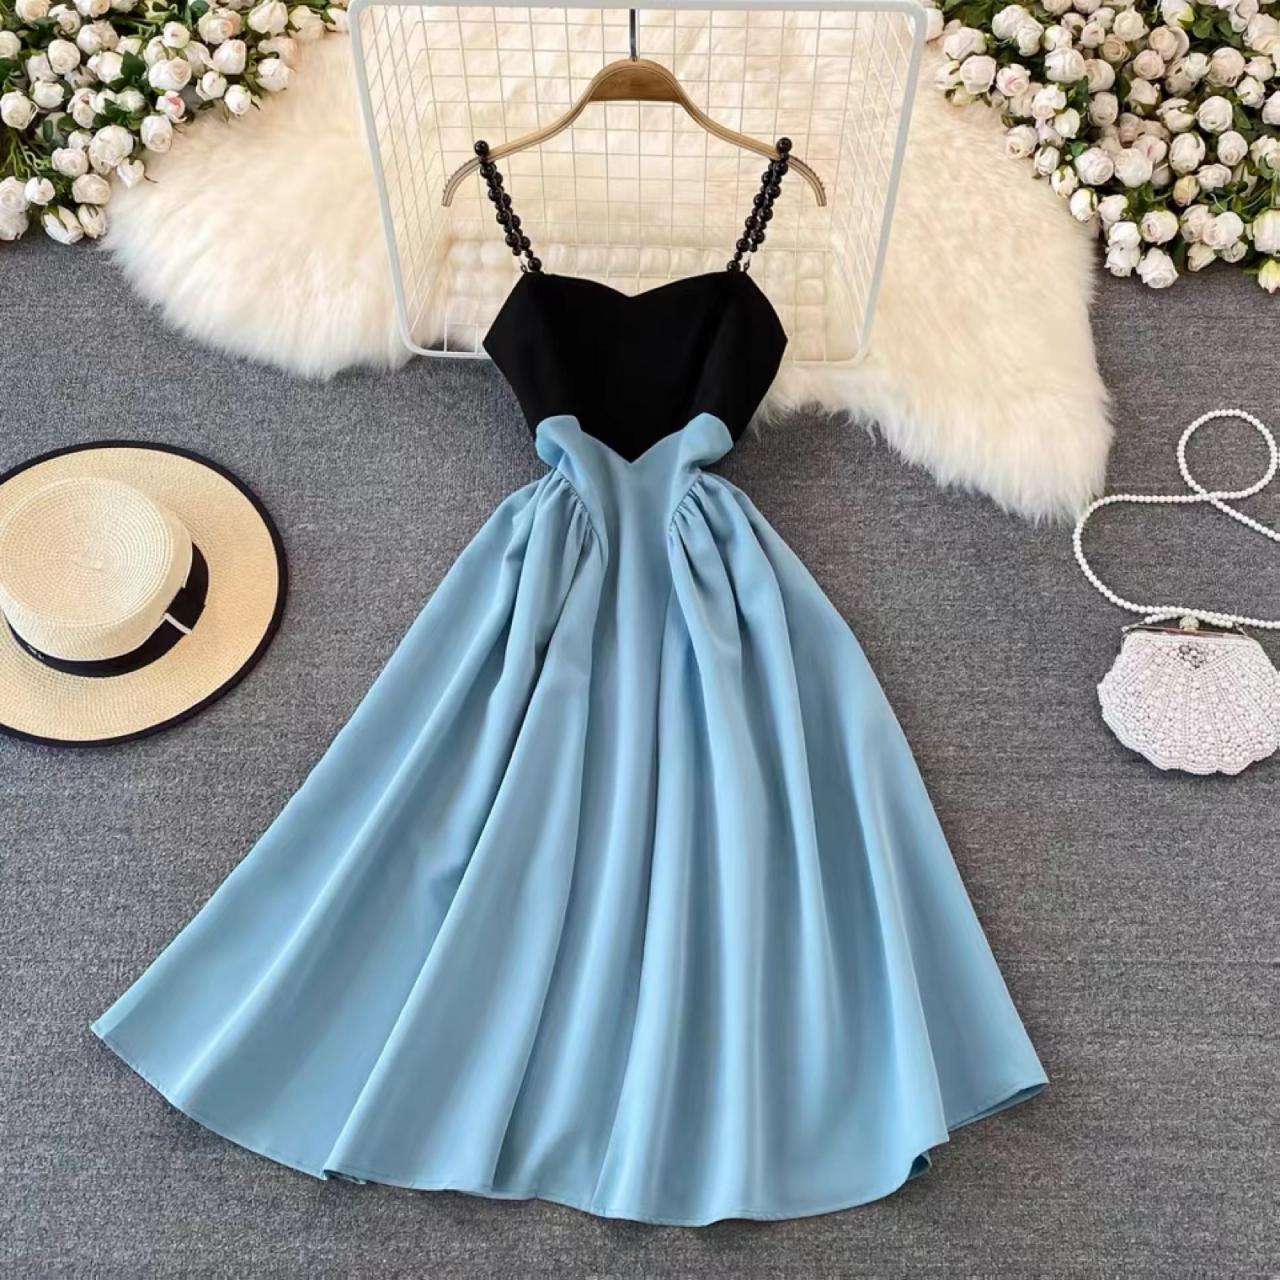 Sexy, Palace Style, Black And Blue Spaghetti Strap Dress, Backless, Slim Party Dress